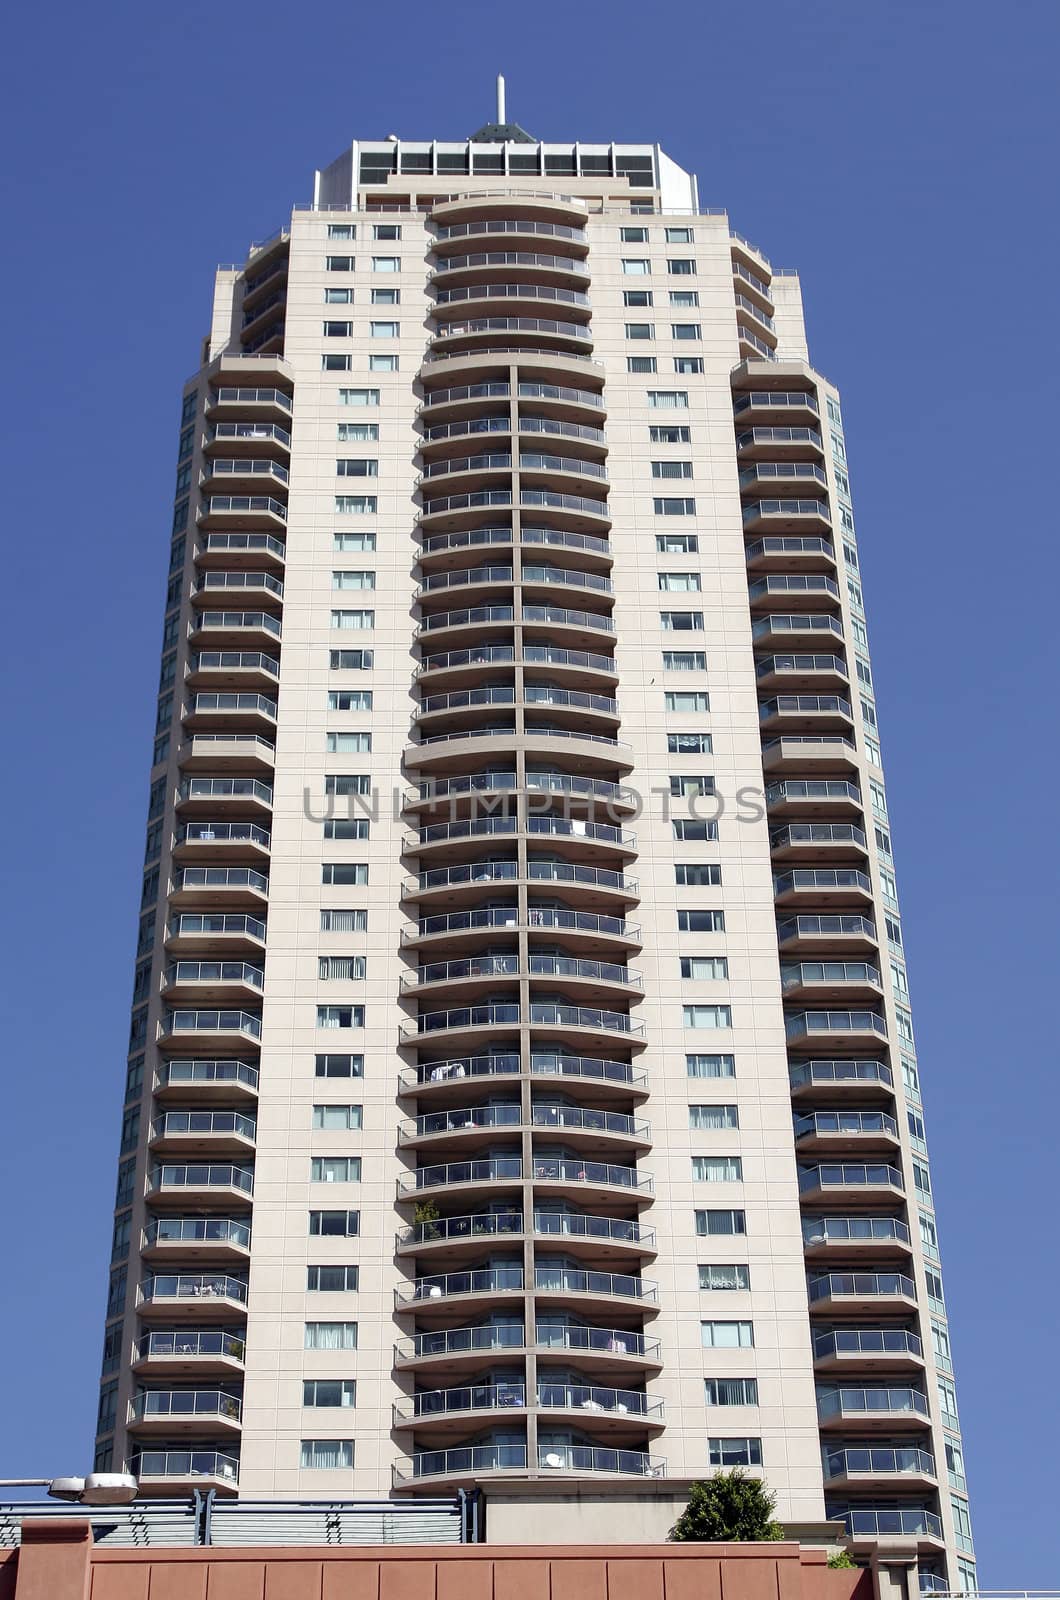 Modern Tall Urban Residential Apartment Building In Sydney, Australia